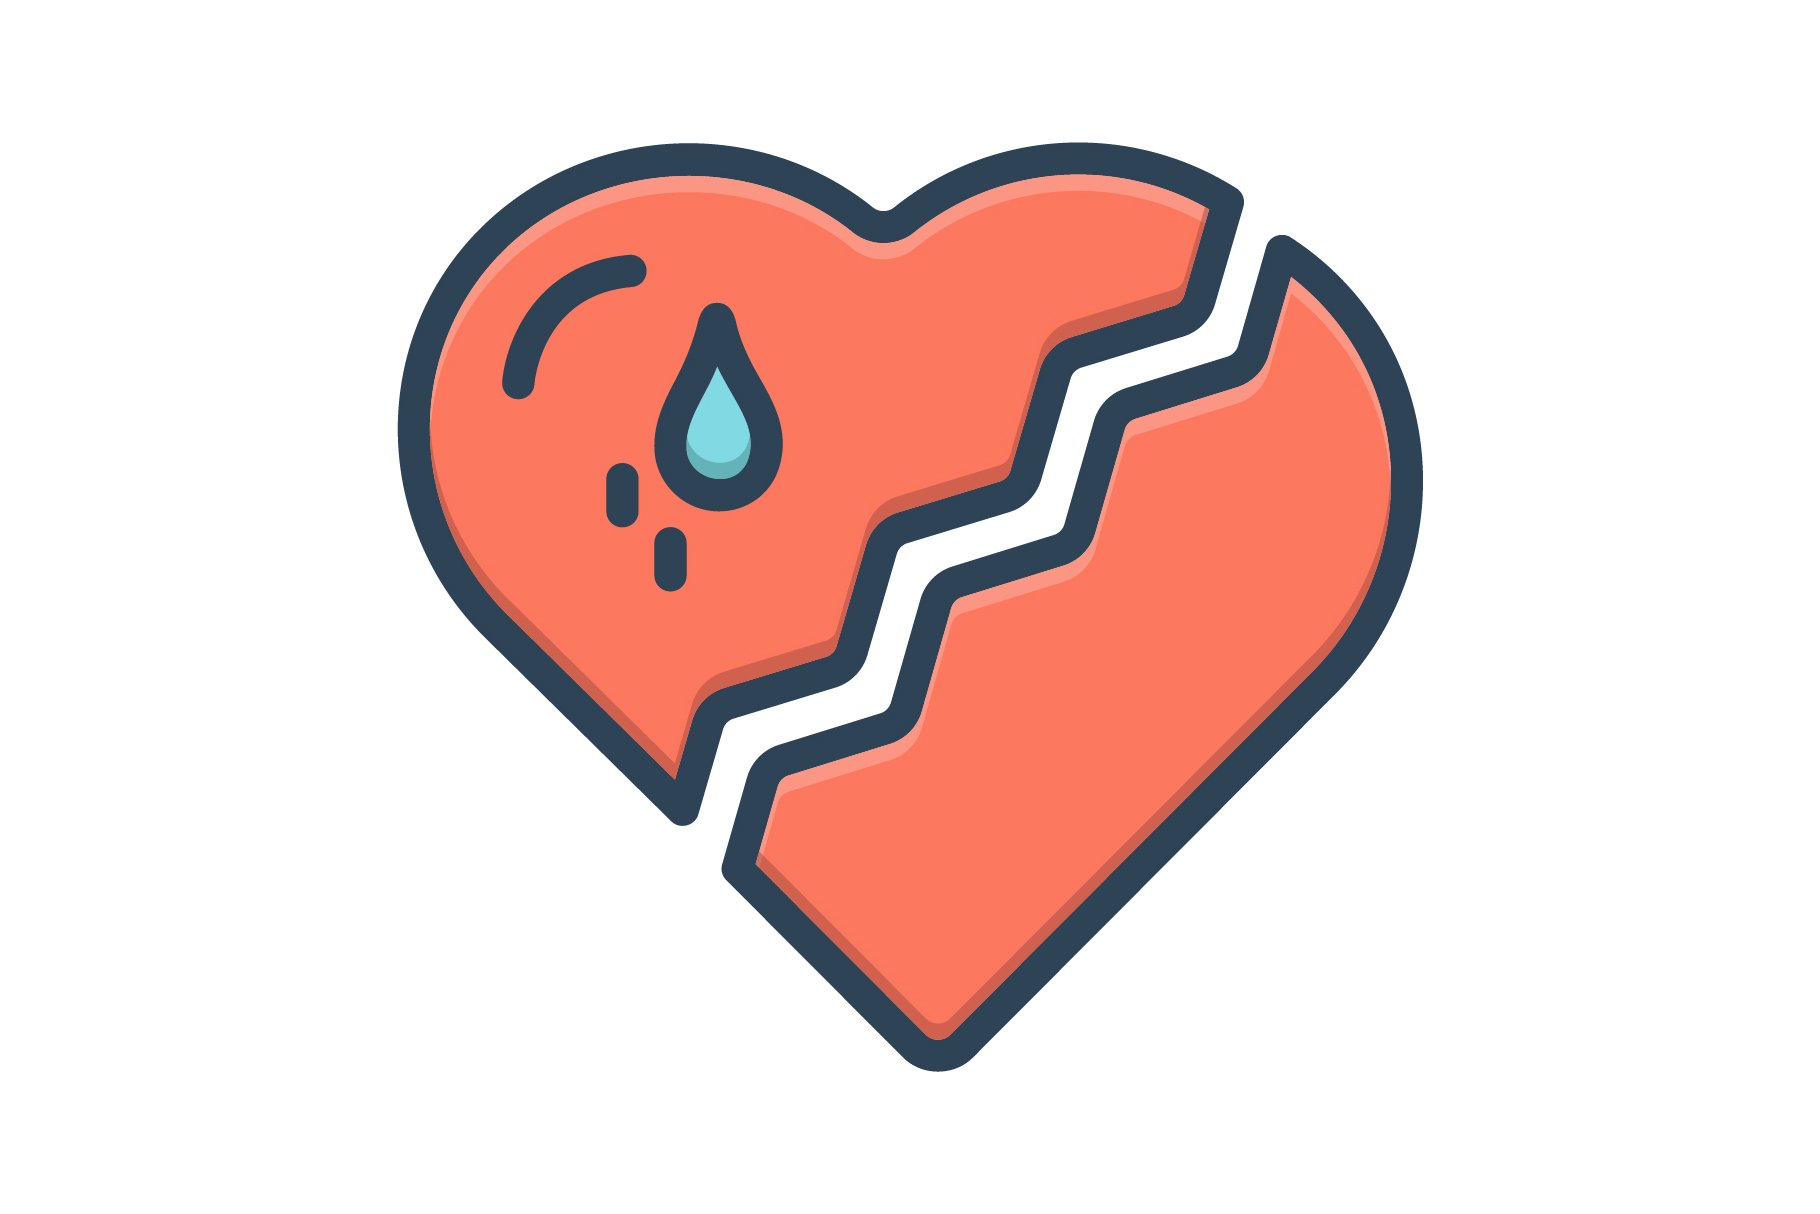 Broken heart icon cover image.